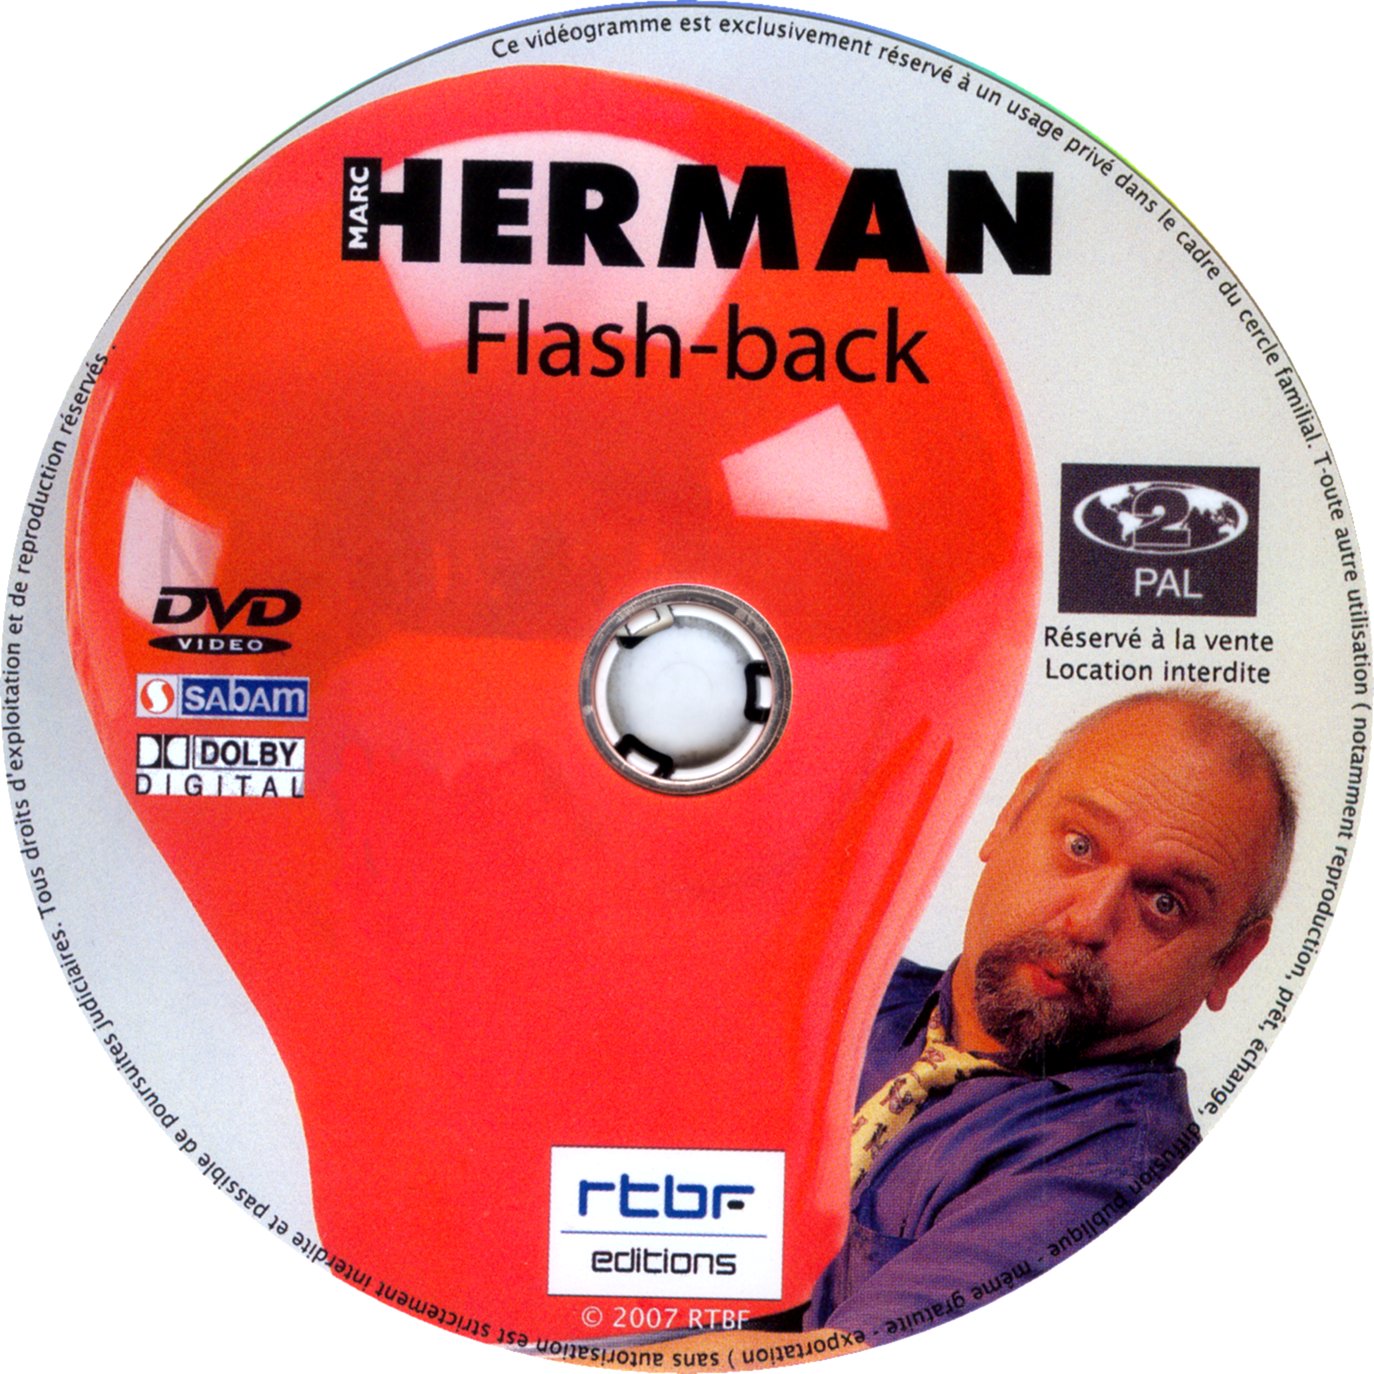 Marc Herman flash-back